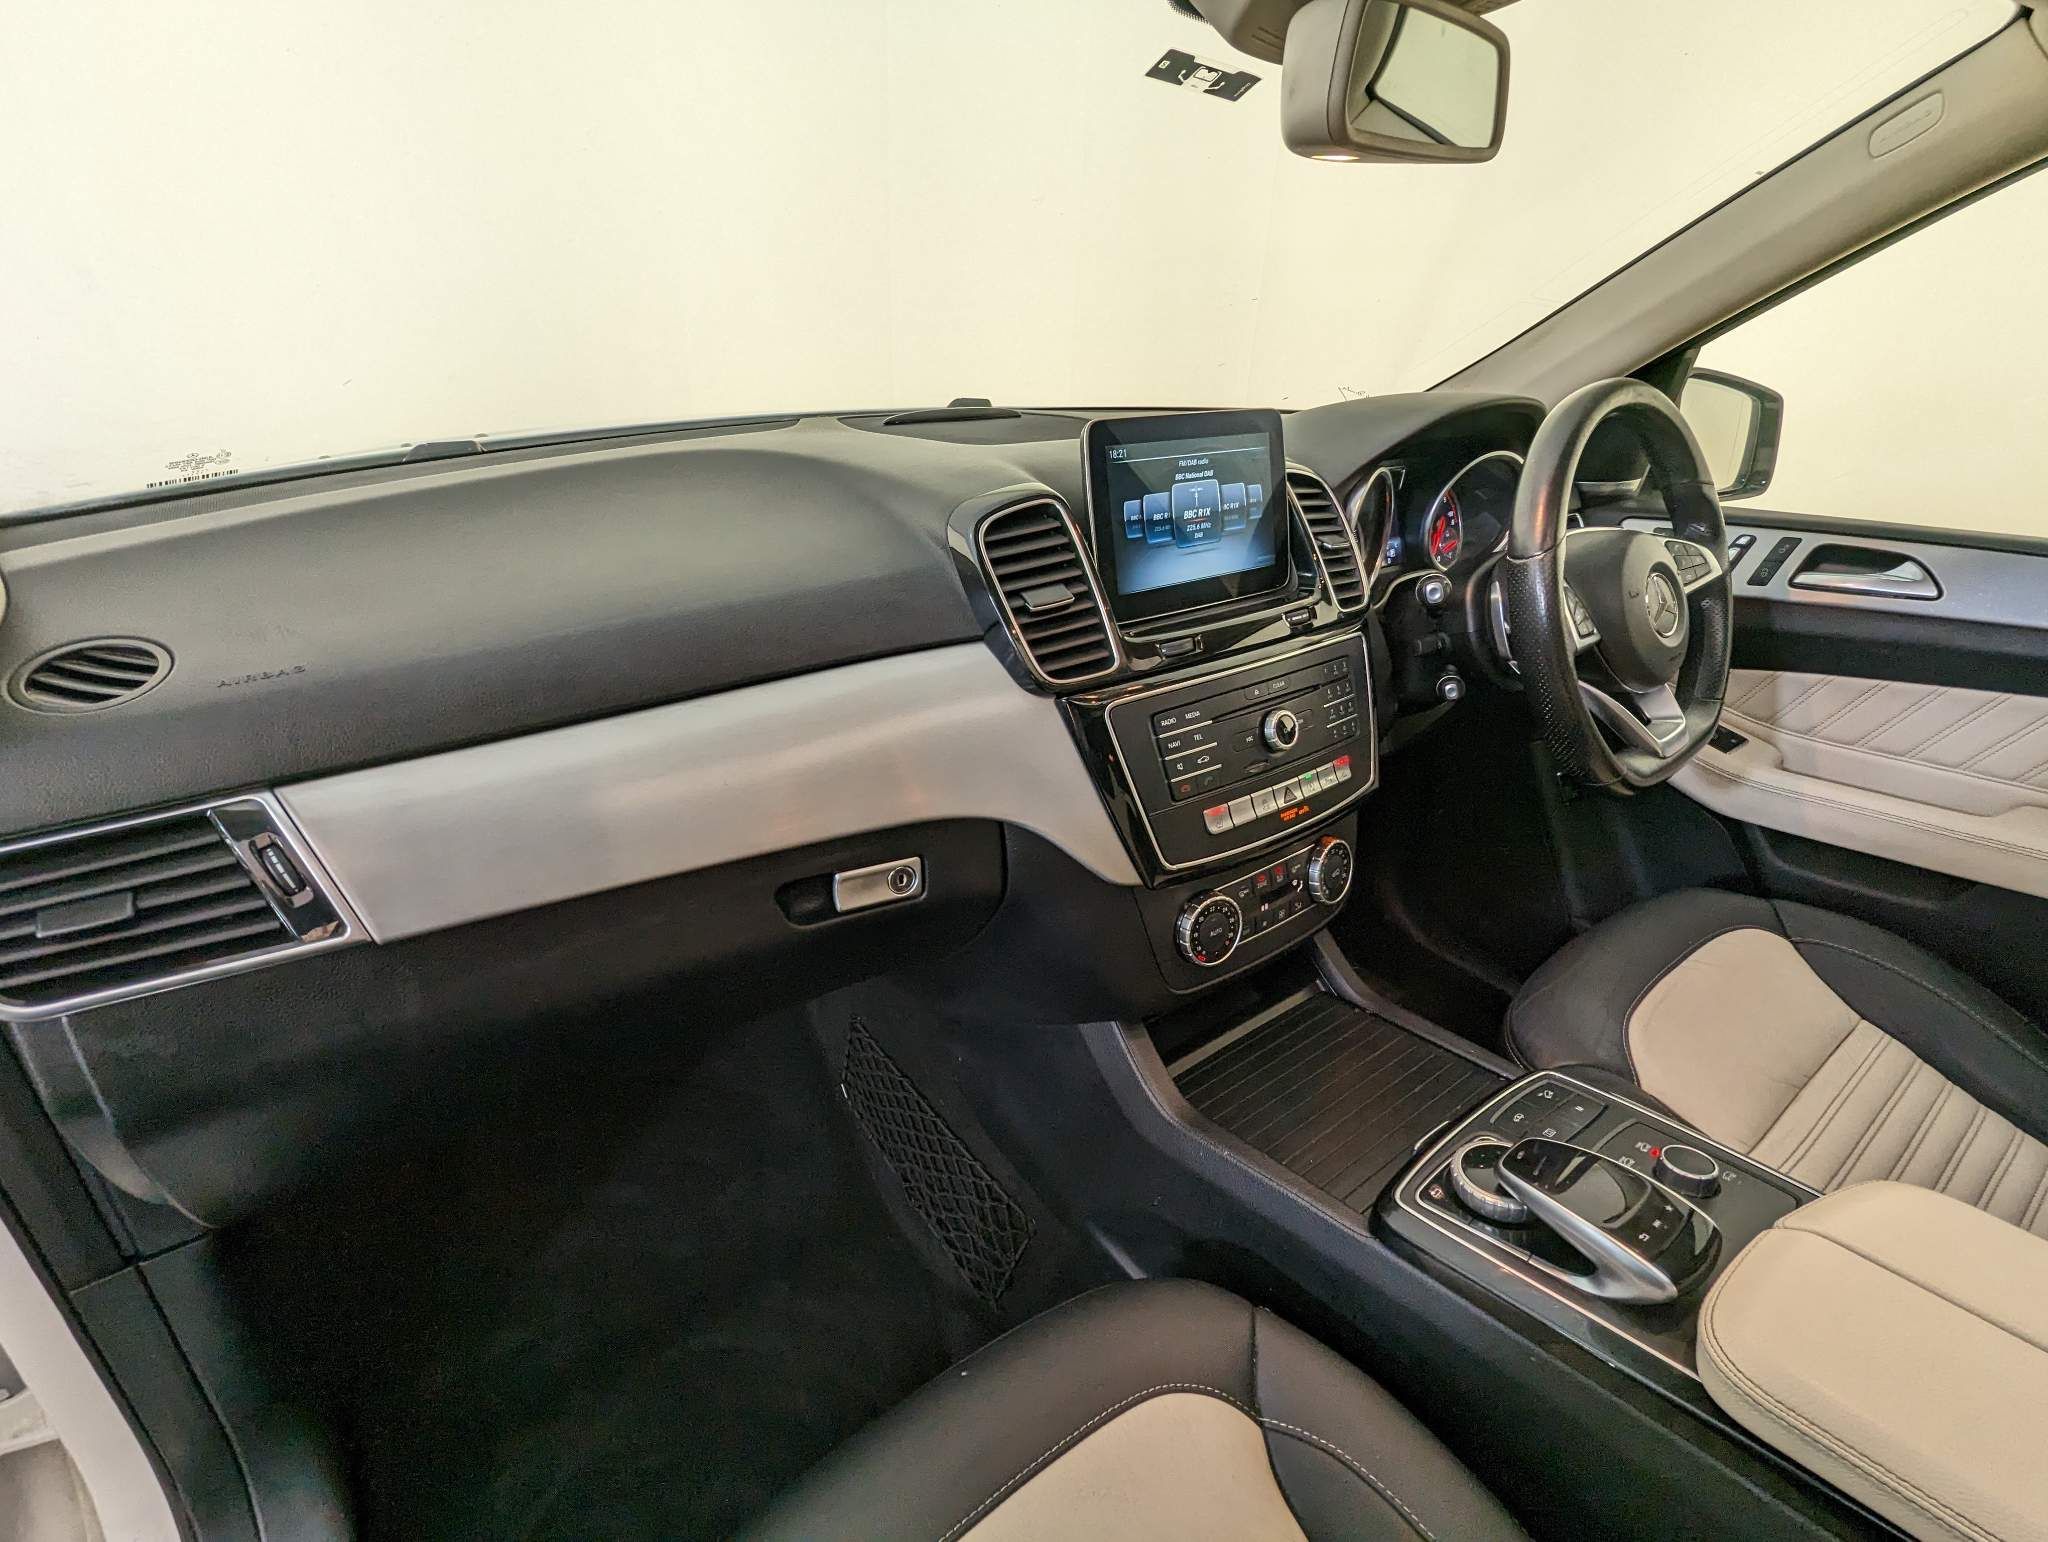 2017 Mercedes Benz GLE Class GLE 350 4Matic  Exterior Interior Walkaround   2017 Chicago Auto Show  YouTube